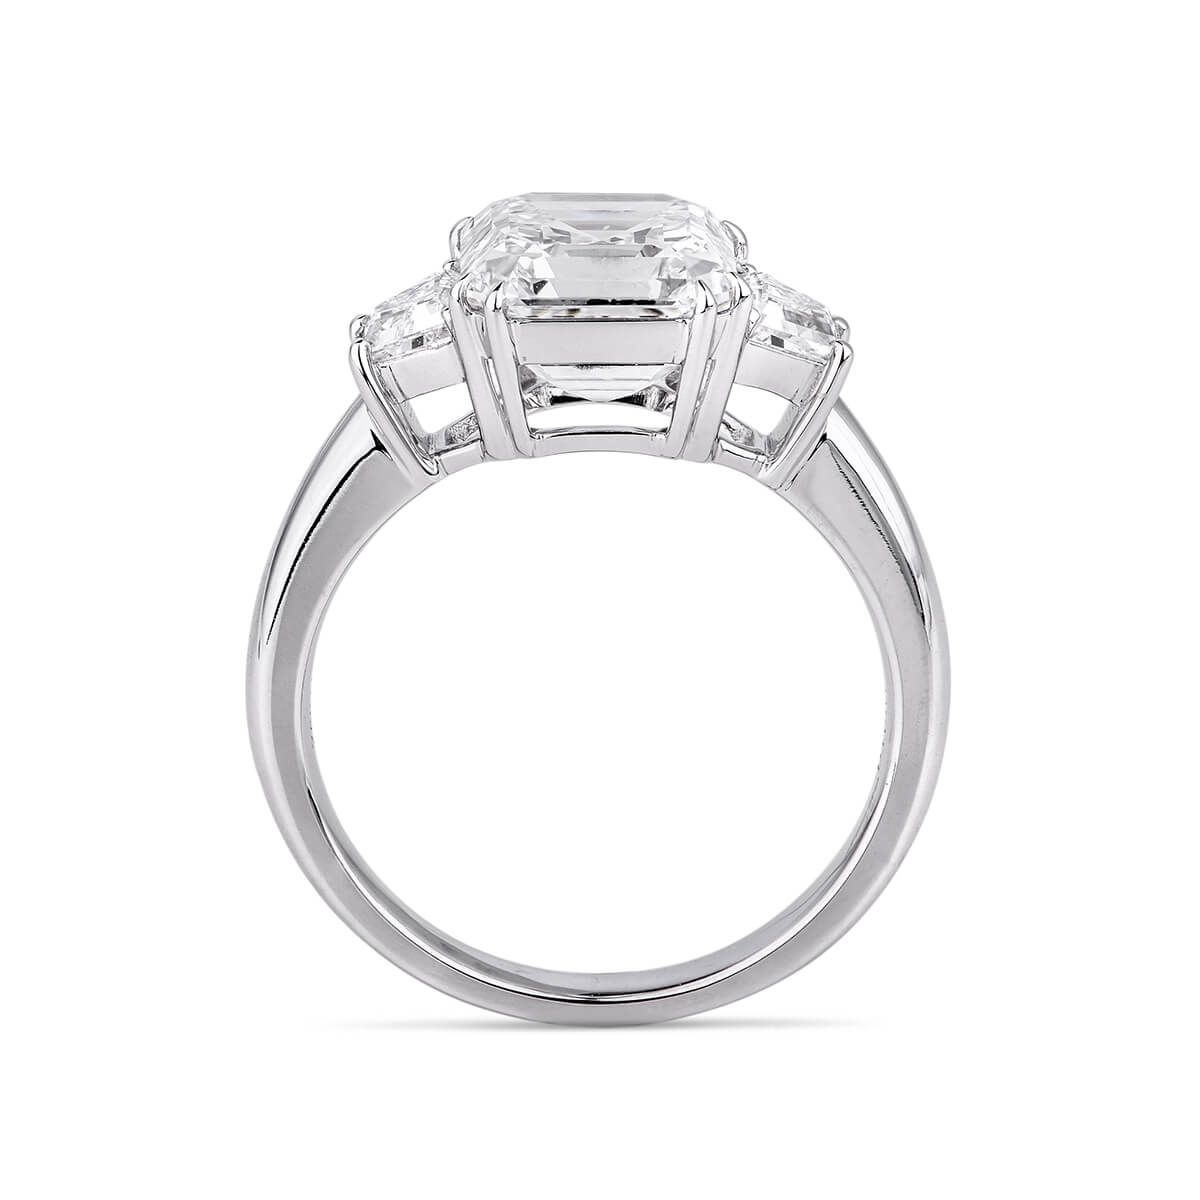  White Diamond Ring, 3.58 Ct. TW, Asscher shape, GIA Certified, 1182720903